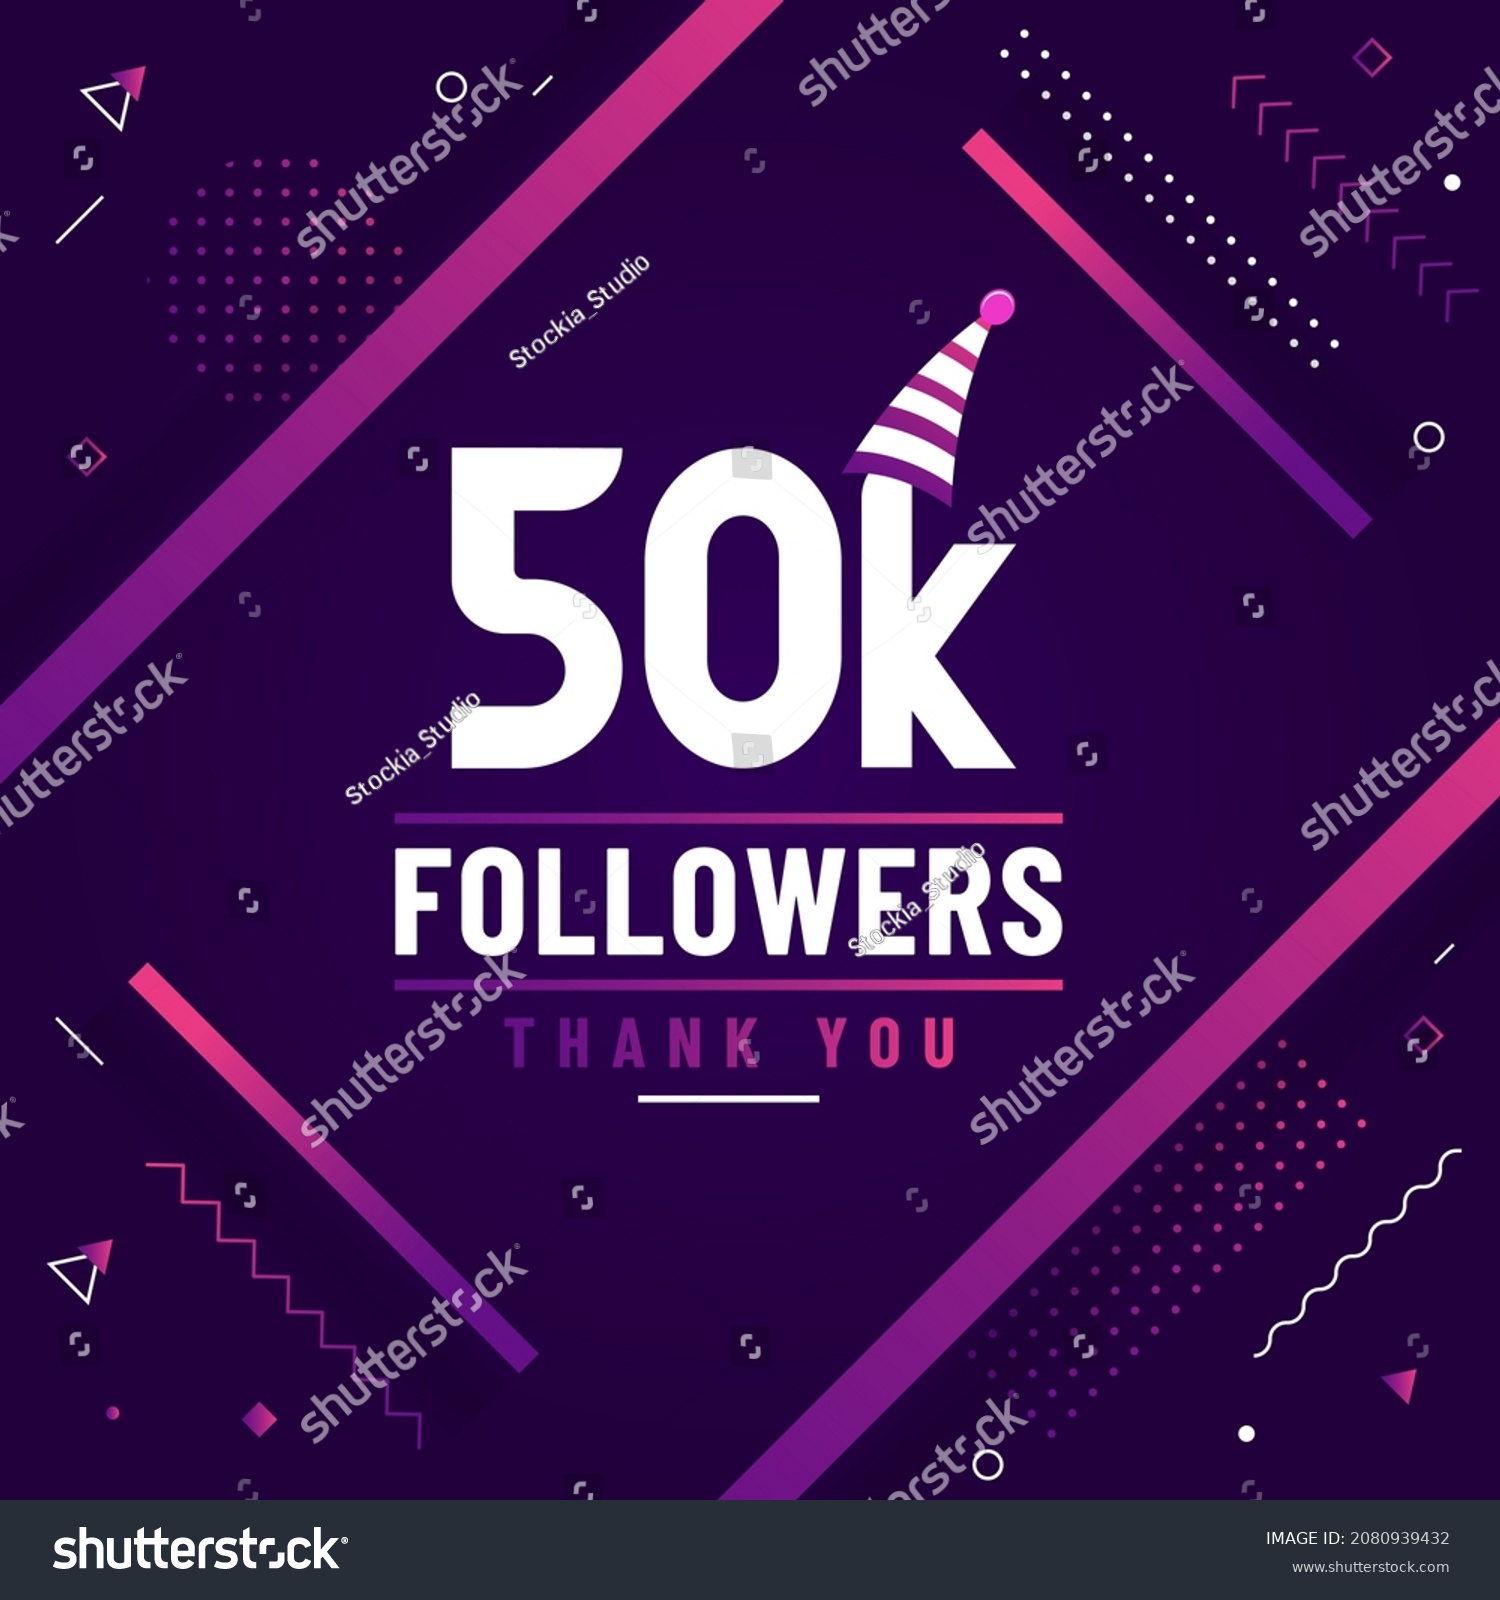 Thank You 50k Followers 50000 Followers Stock Vector Royalty Free 2080939432 1378